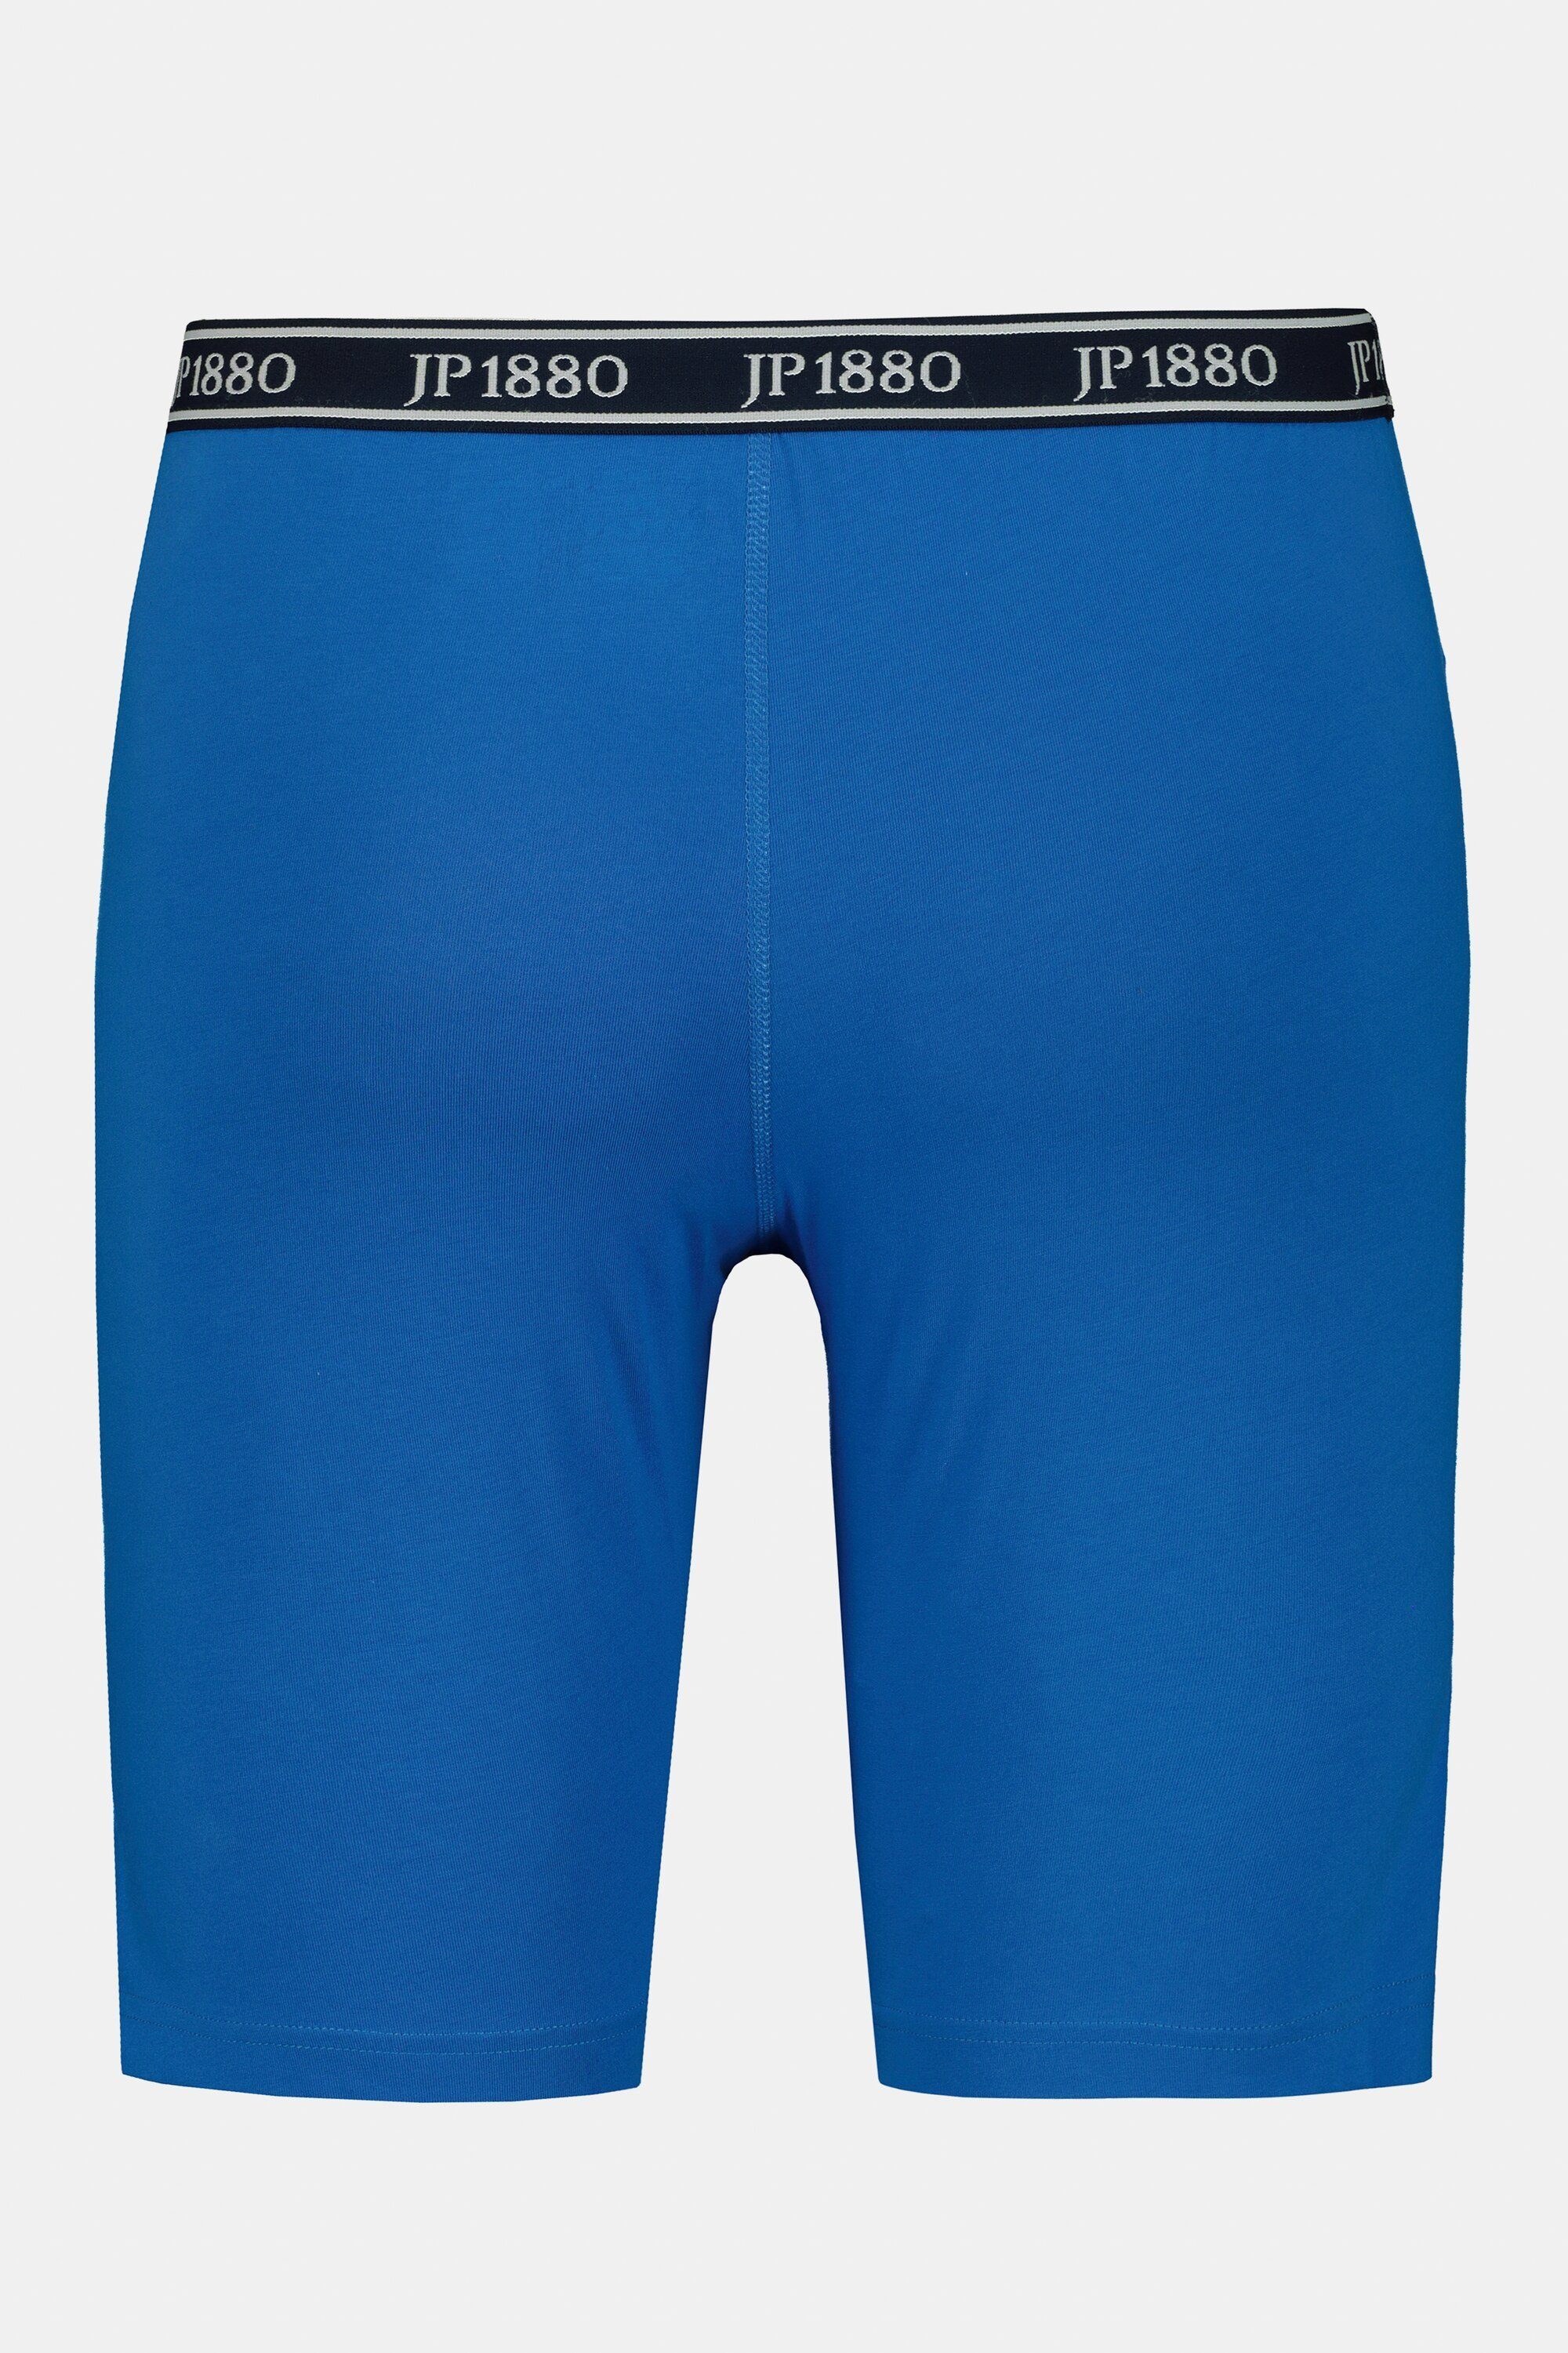 Longpants Komfortbund JP1880 polarlichtblau FLEXNAMIC® JP1880 Unterhose Boxershorts